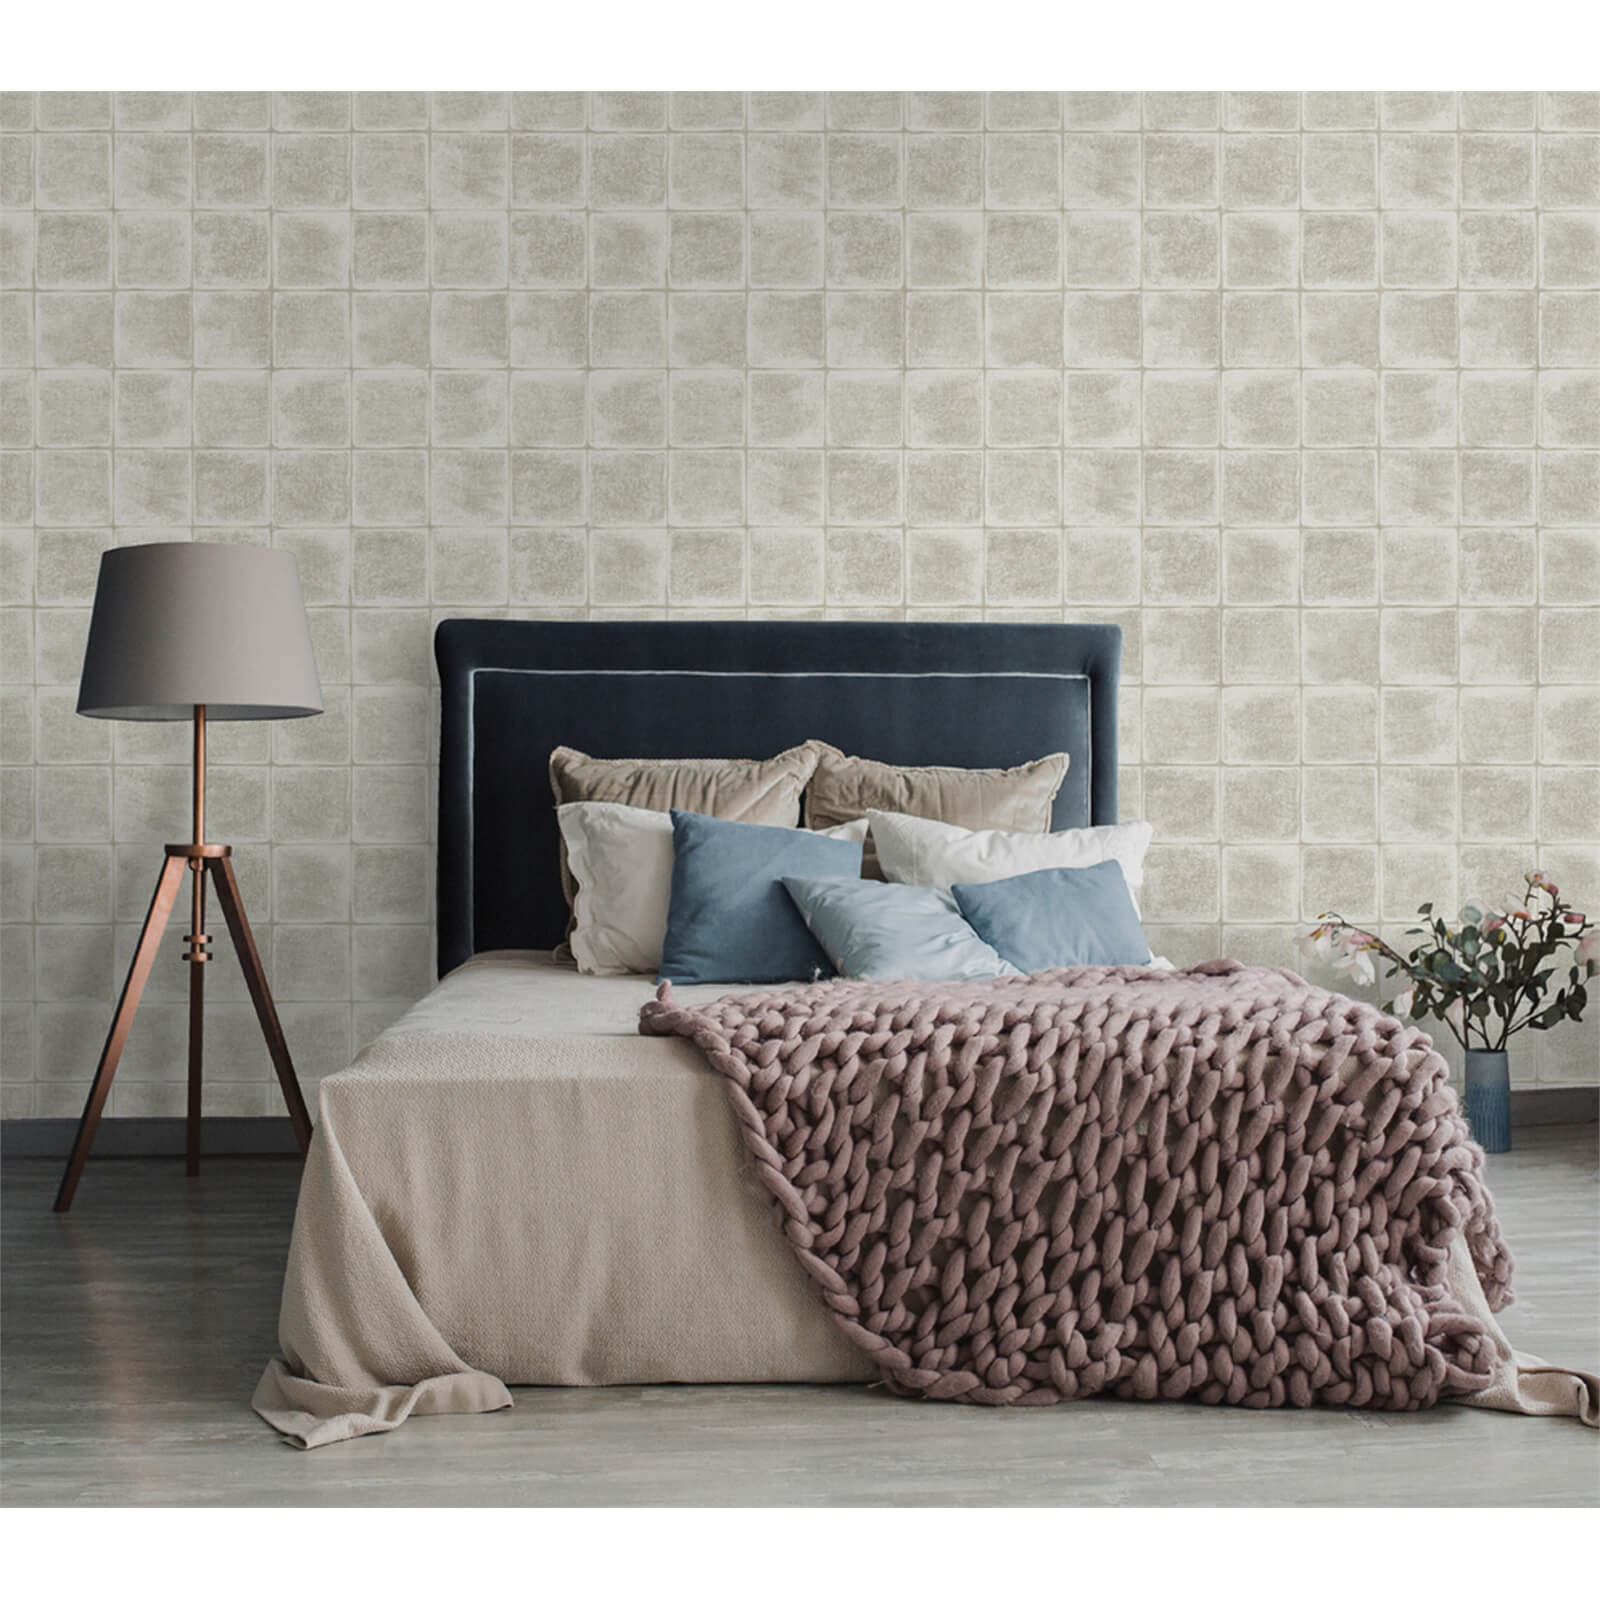 Holden Decor Furano Tile Textured Metallic Taupe Wallpaper